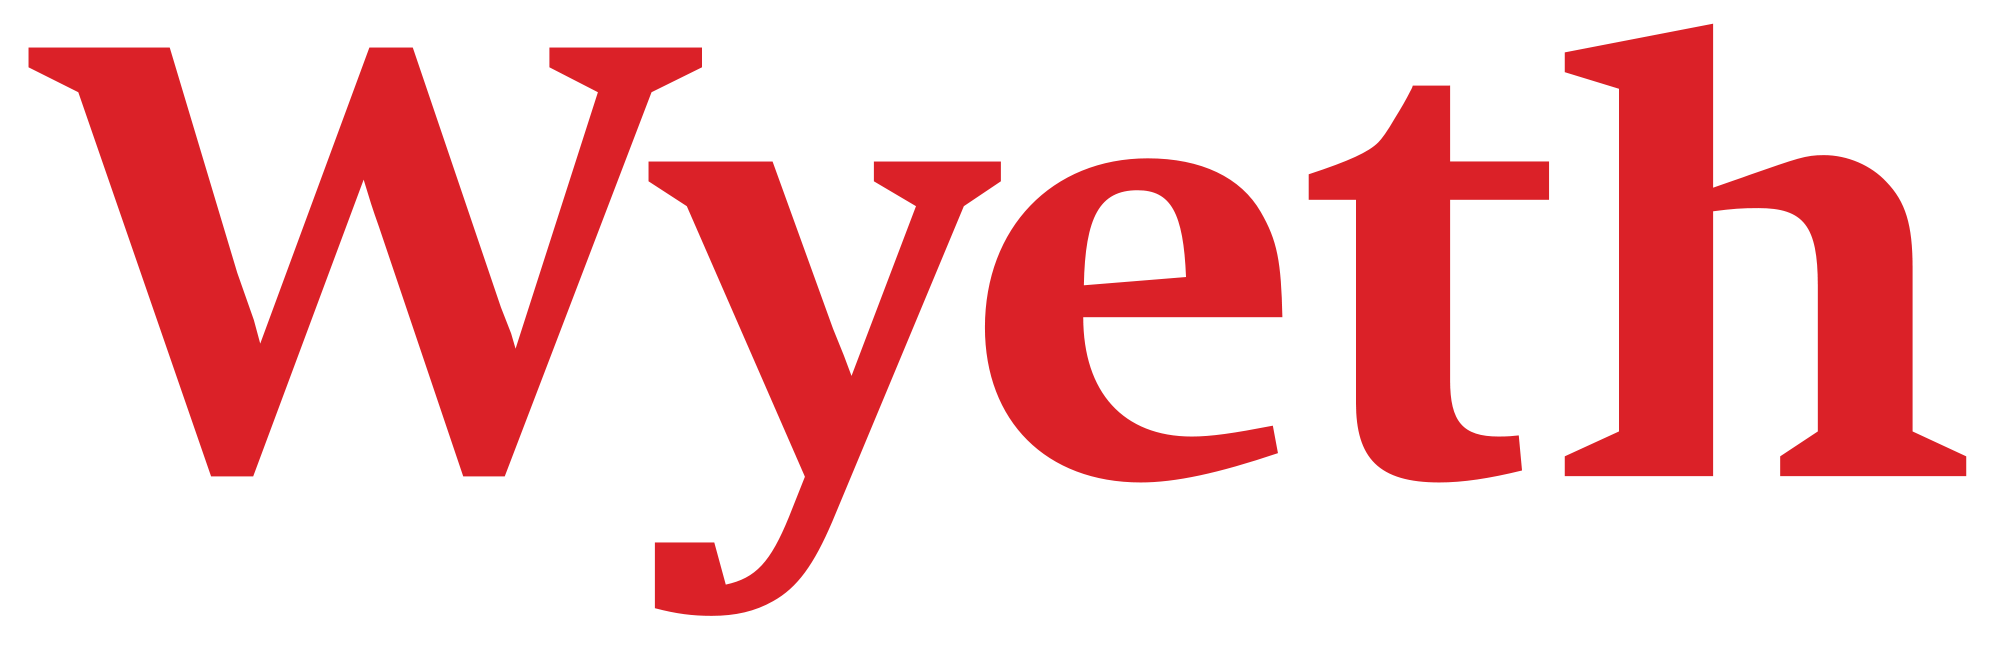 Wyeth Logo - File:Wyeth logo.svg - Wikimedia Commons